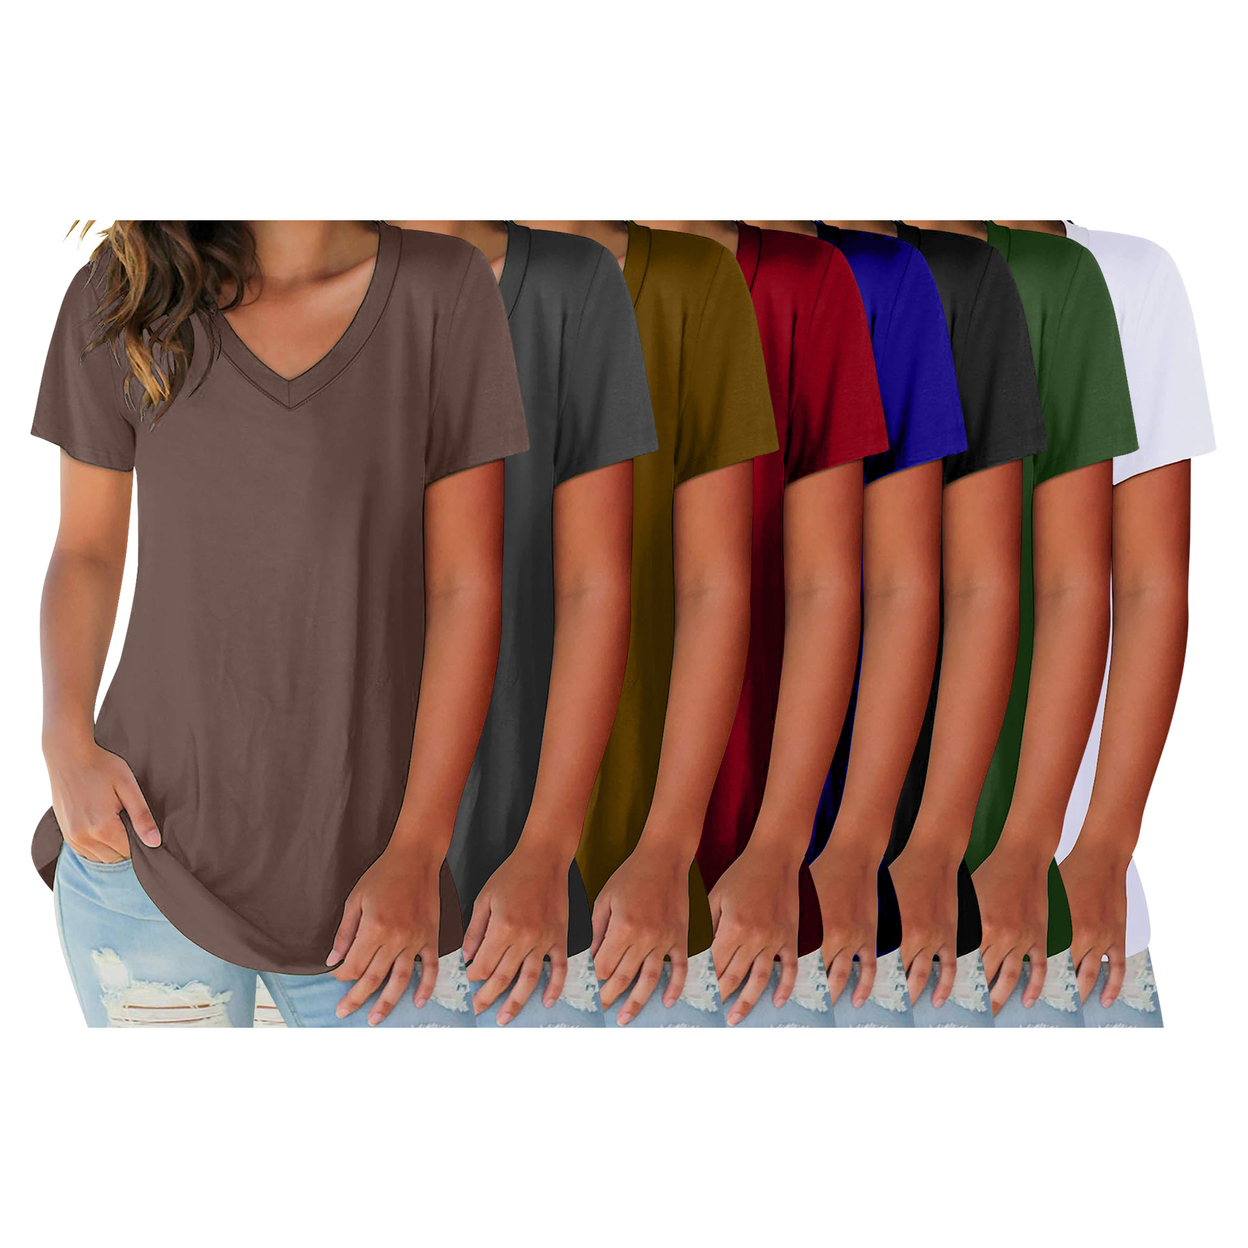 2-Pack: Women's Ultra Soft Smooth Cotton Blend Basic V-Neck Short Sleeve Shirts - Navy & Brown, Large